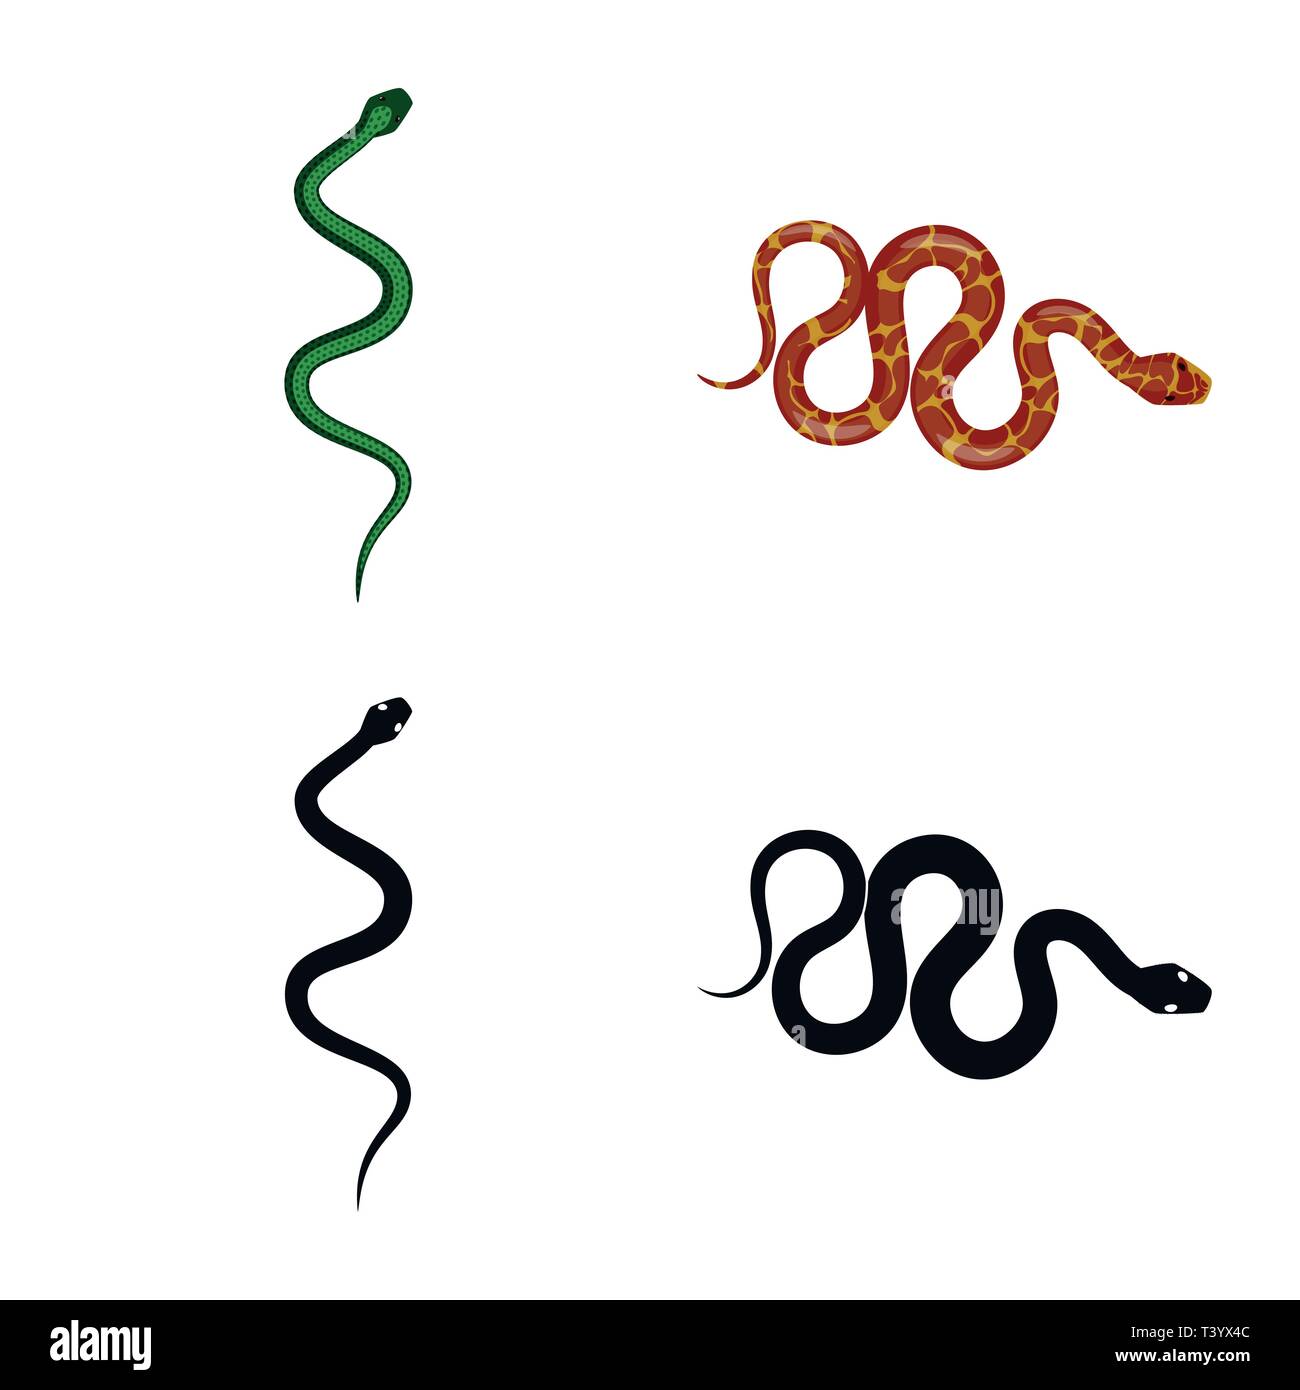 viper,snake,tail,wild,spiral,tropics,green,forest,brown,jump,death,fear ...